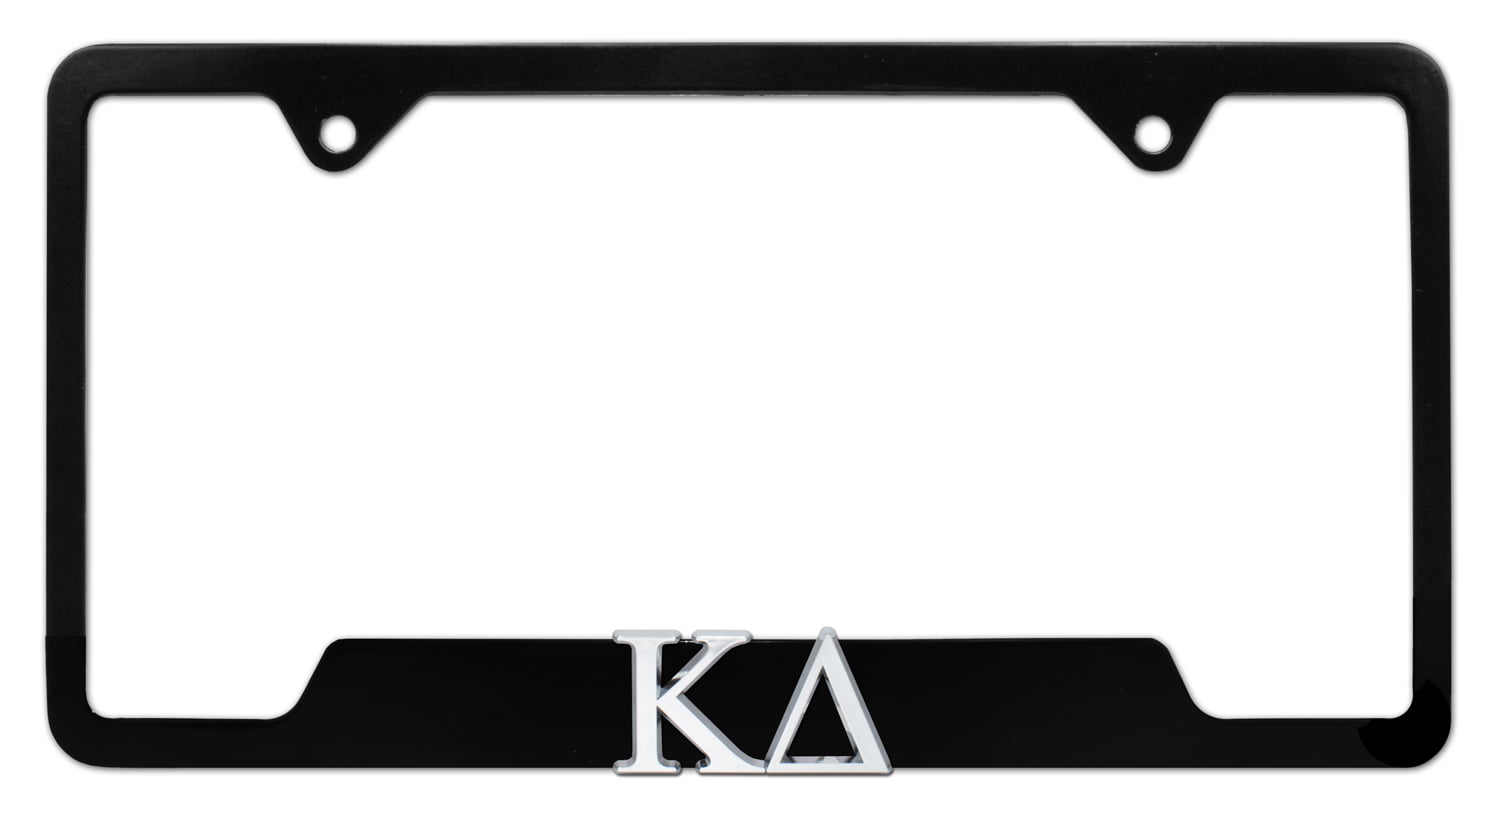 Kappa Delta Sorority Black Open License Plate Frame